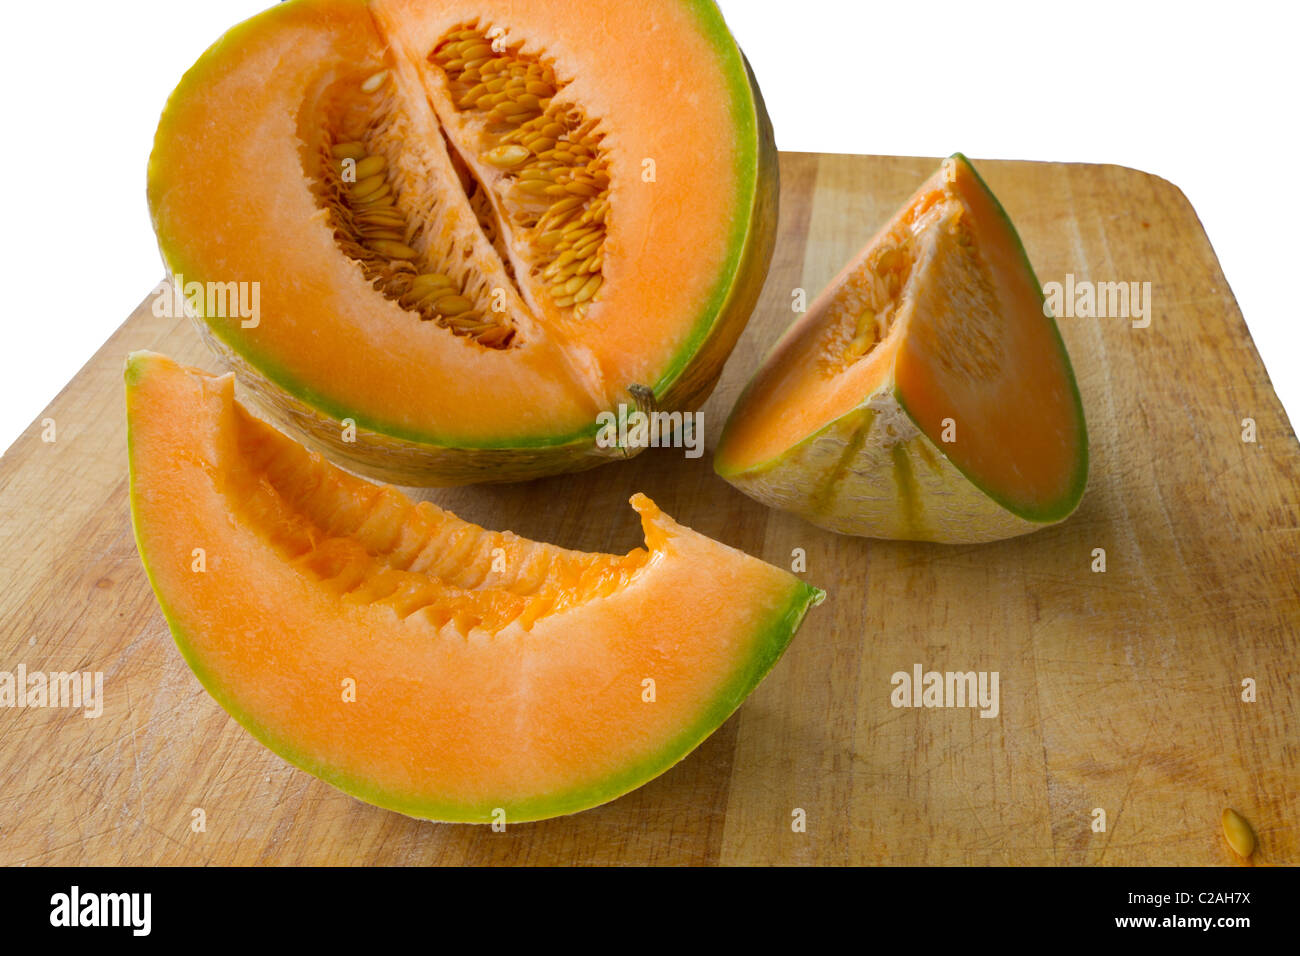 sliced up fresh orange cantaloupe melon on wooden carving board Stock Photo